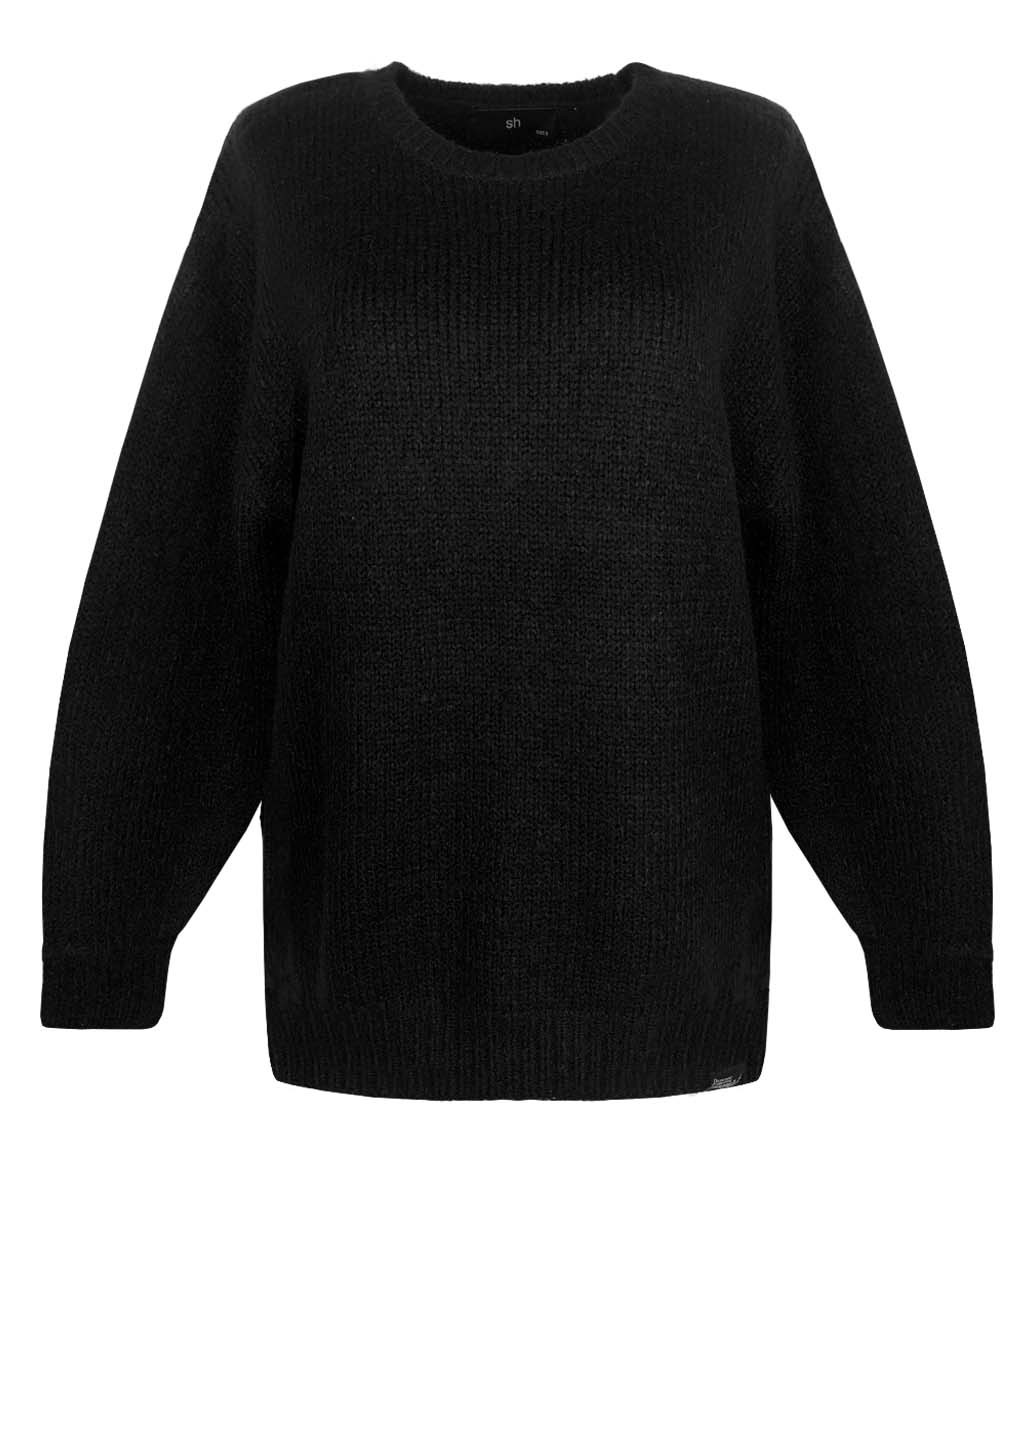 Черный зимний свитер oversized джемпер Silvian Heach